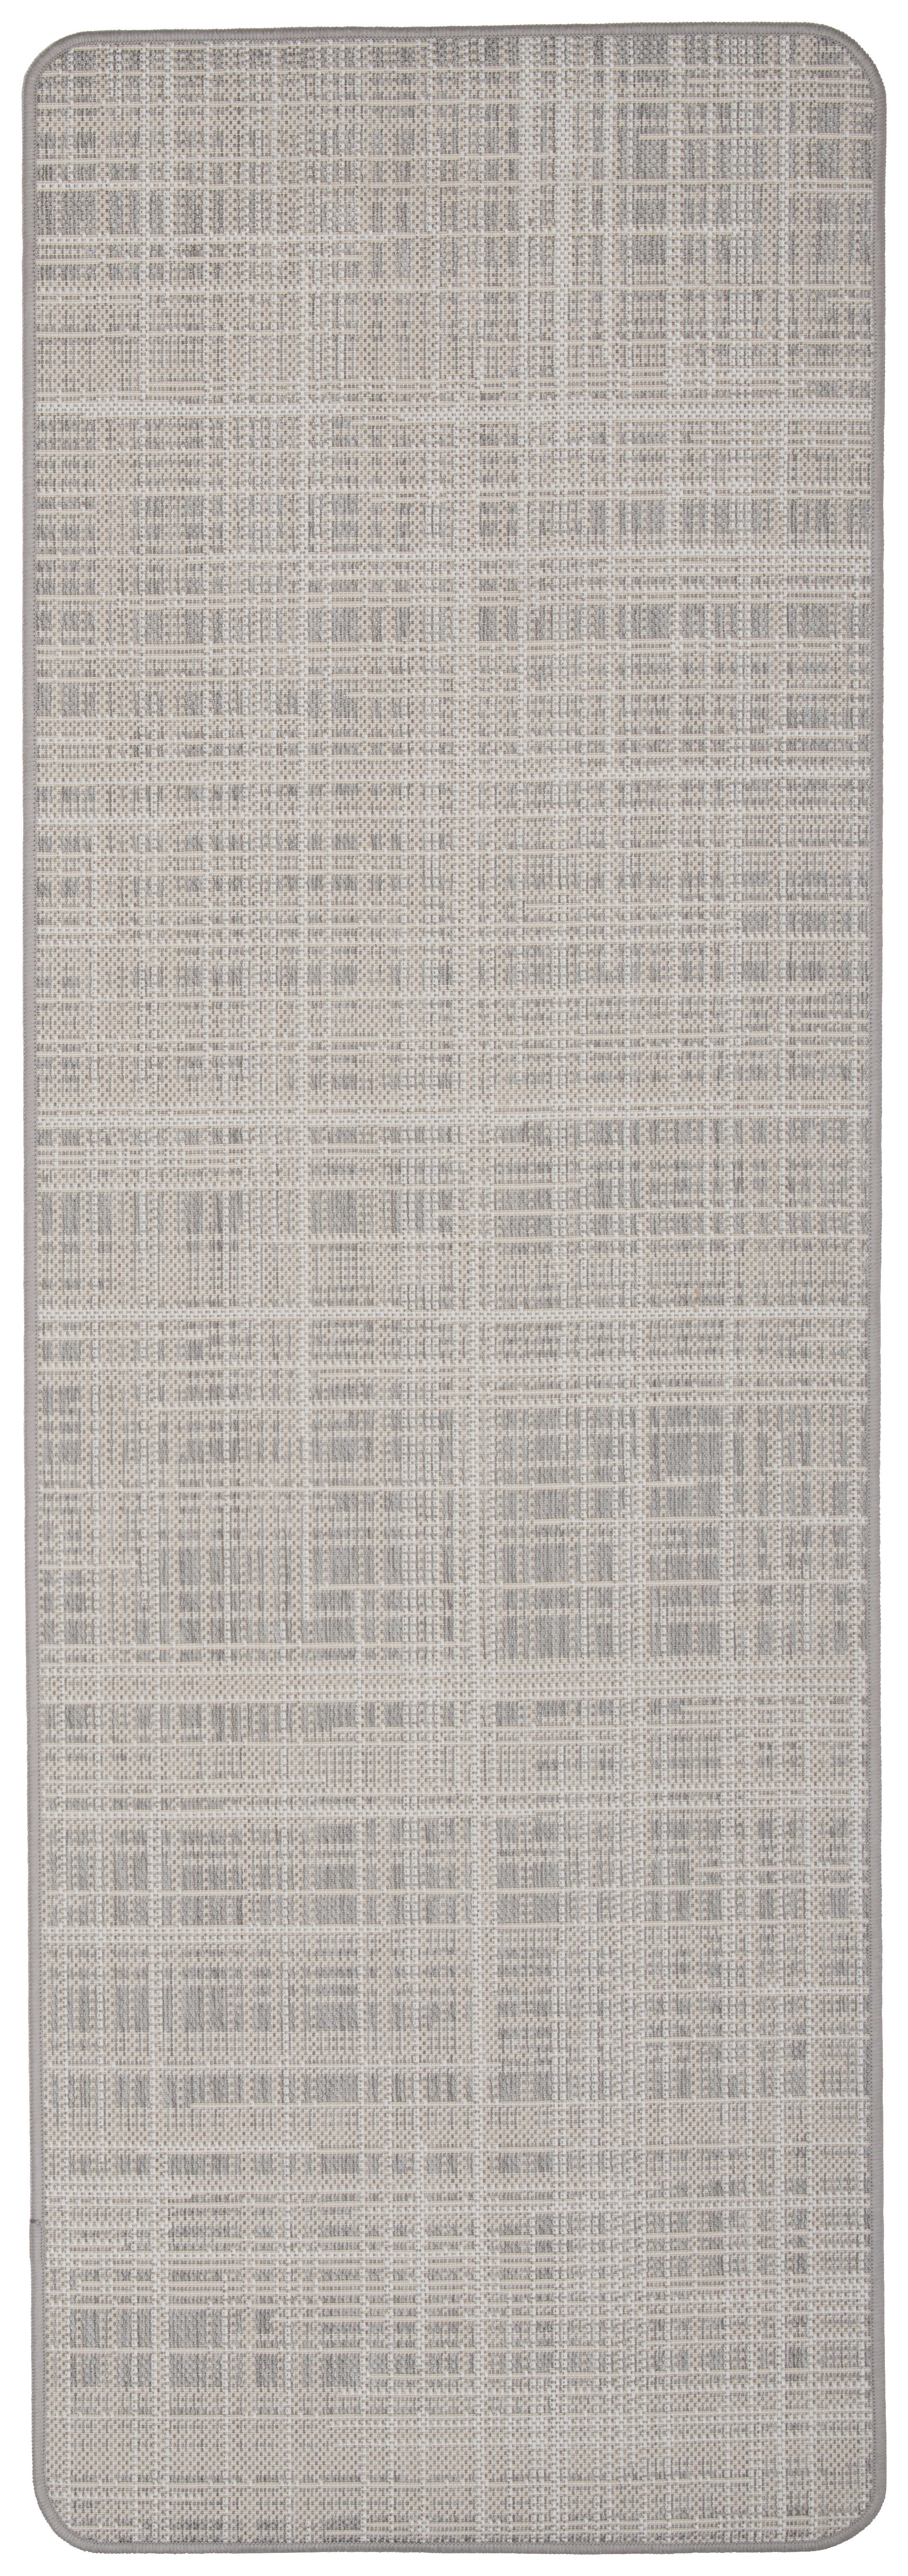 LÄUFER 67/200 cm  - Grau, KONVENTIONELL, Textil (67/200cm) - Boxxx